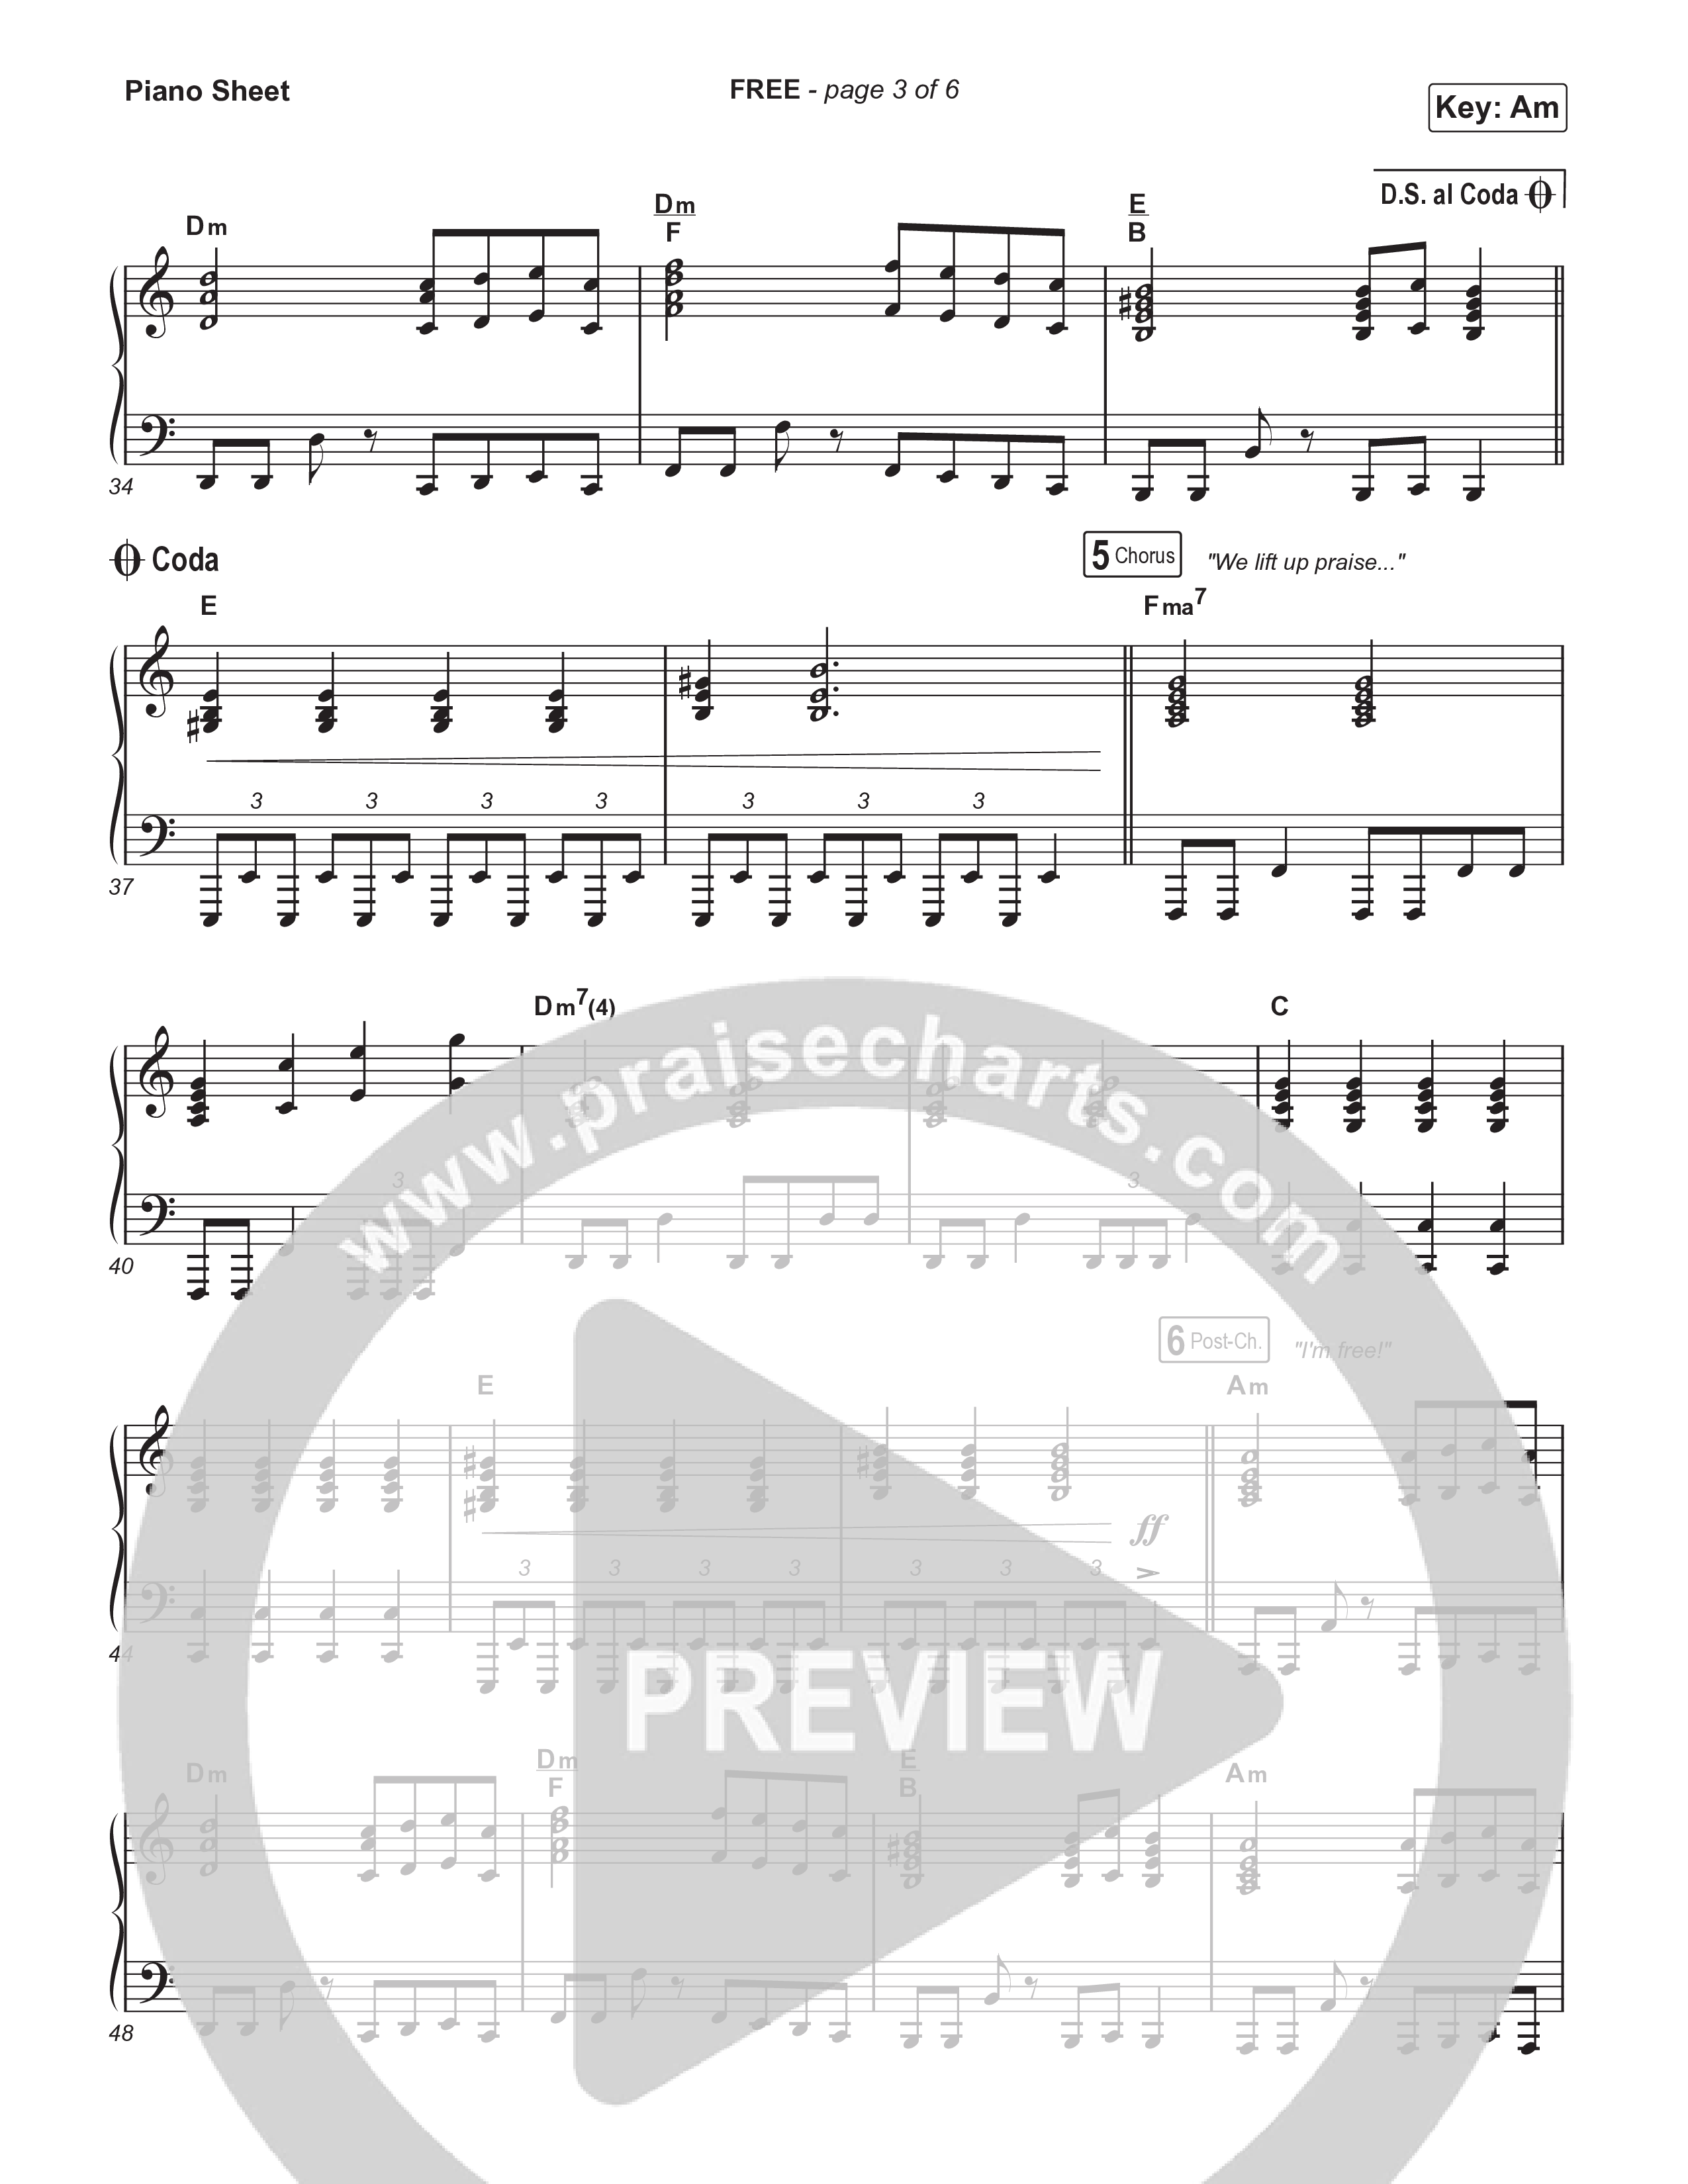 FREE Piano Sheet (SEU Worship)